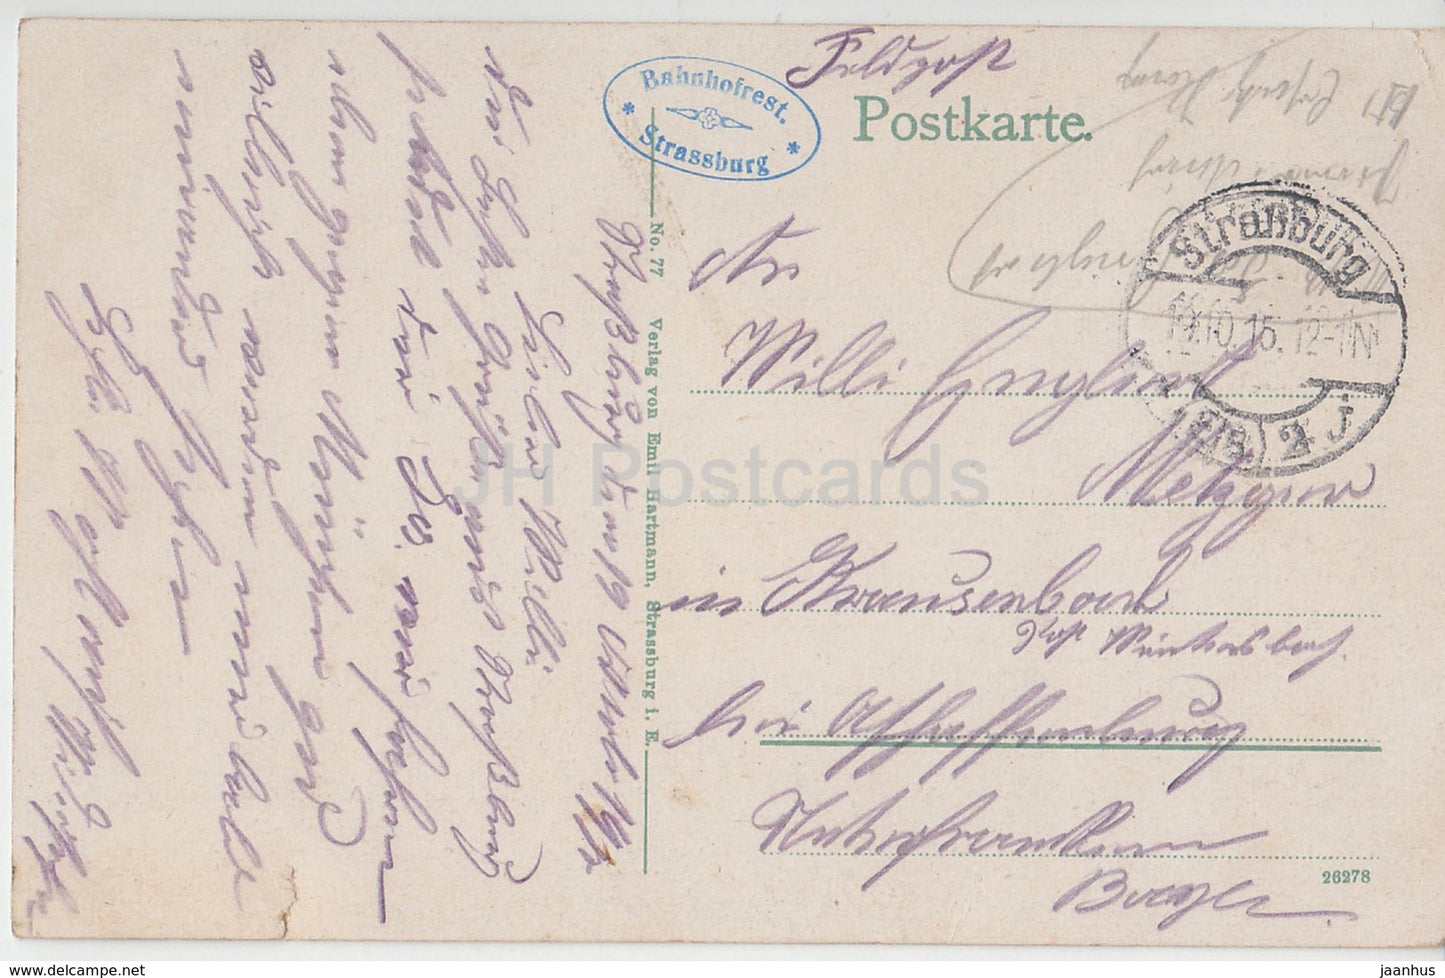 Strasbourg - Das Münster - cathédrale - Feldpost - Bahnhofrest. - 77 - 1912 - carte postale ancienne - France - oblitérée